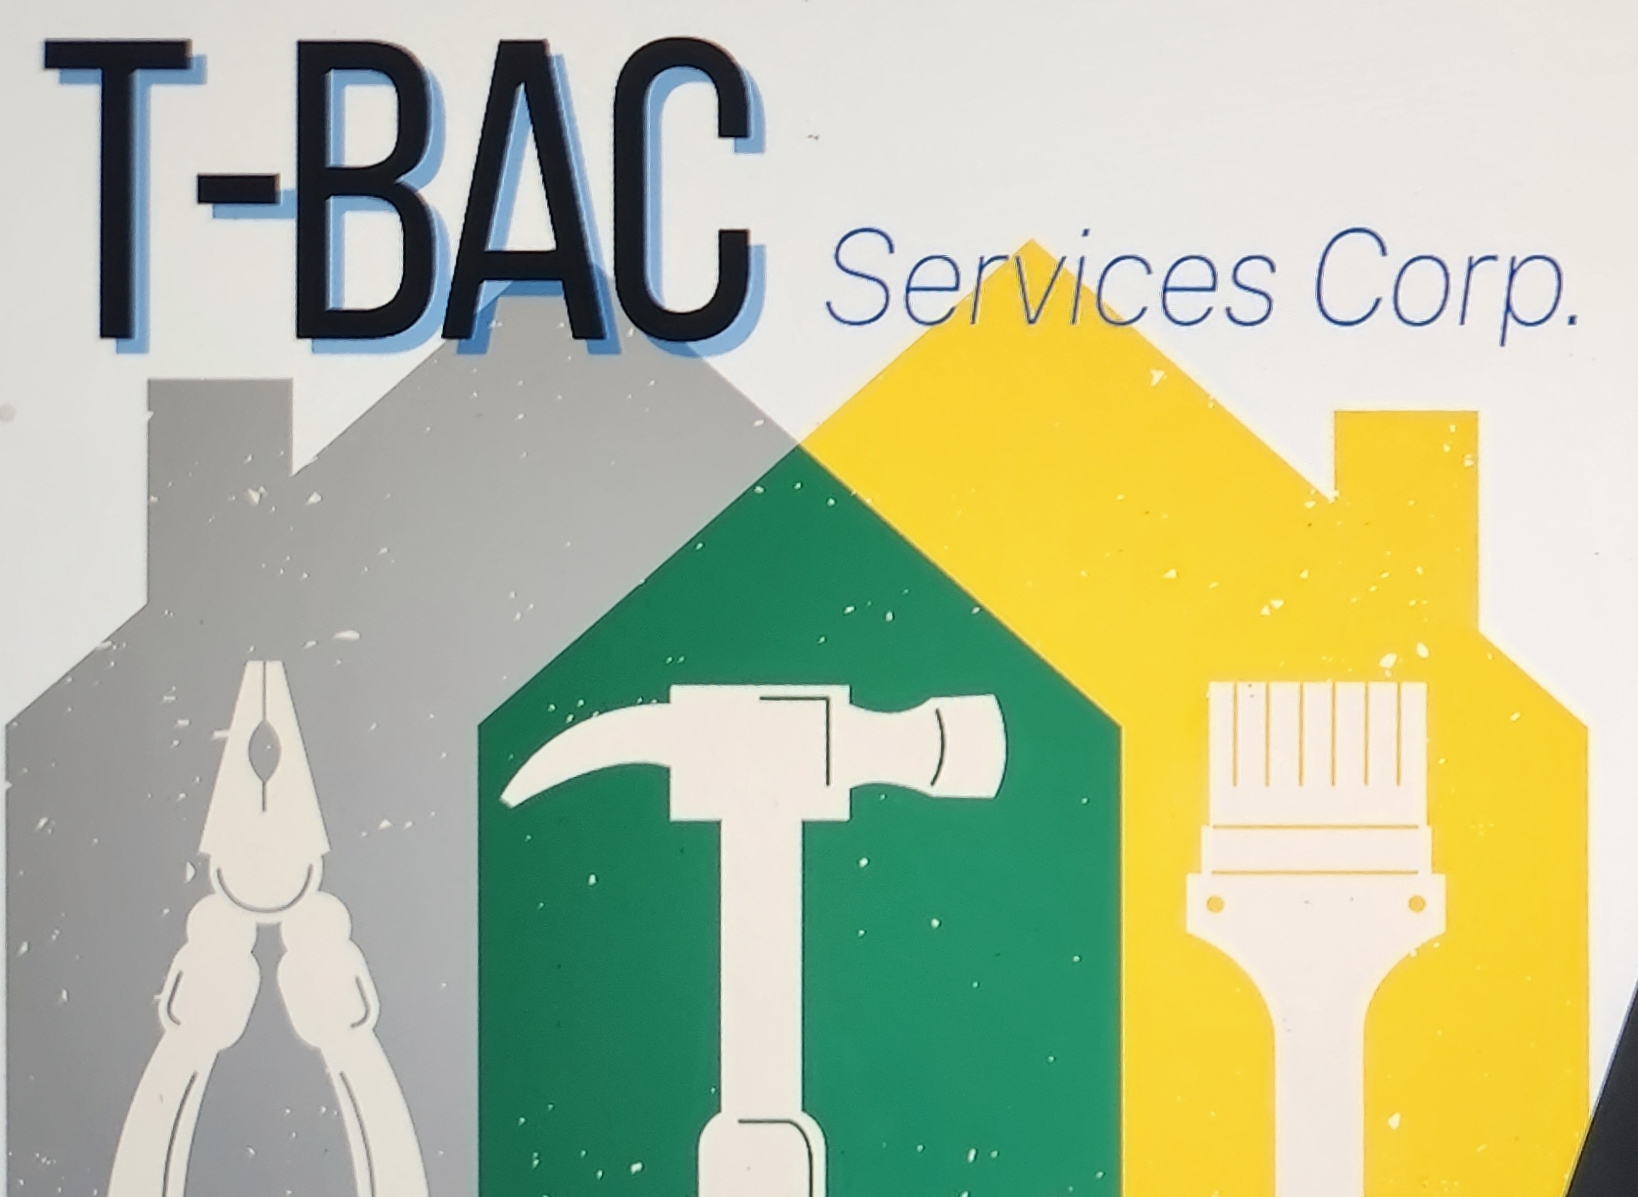 TBAC Services Corp. Logo